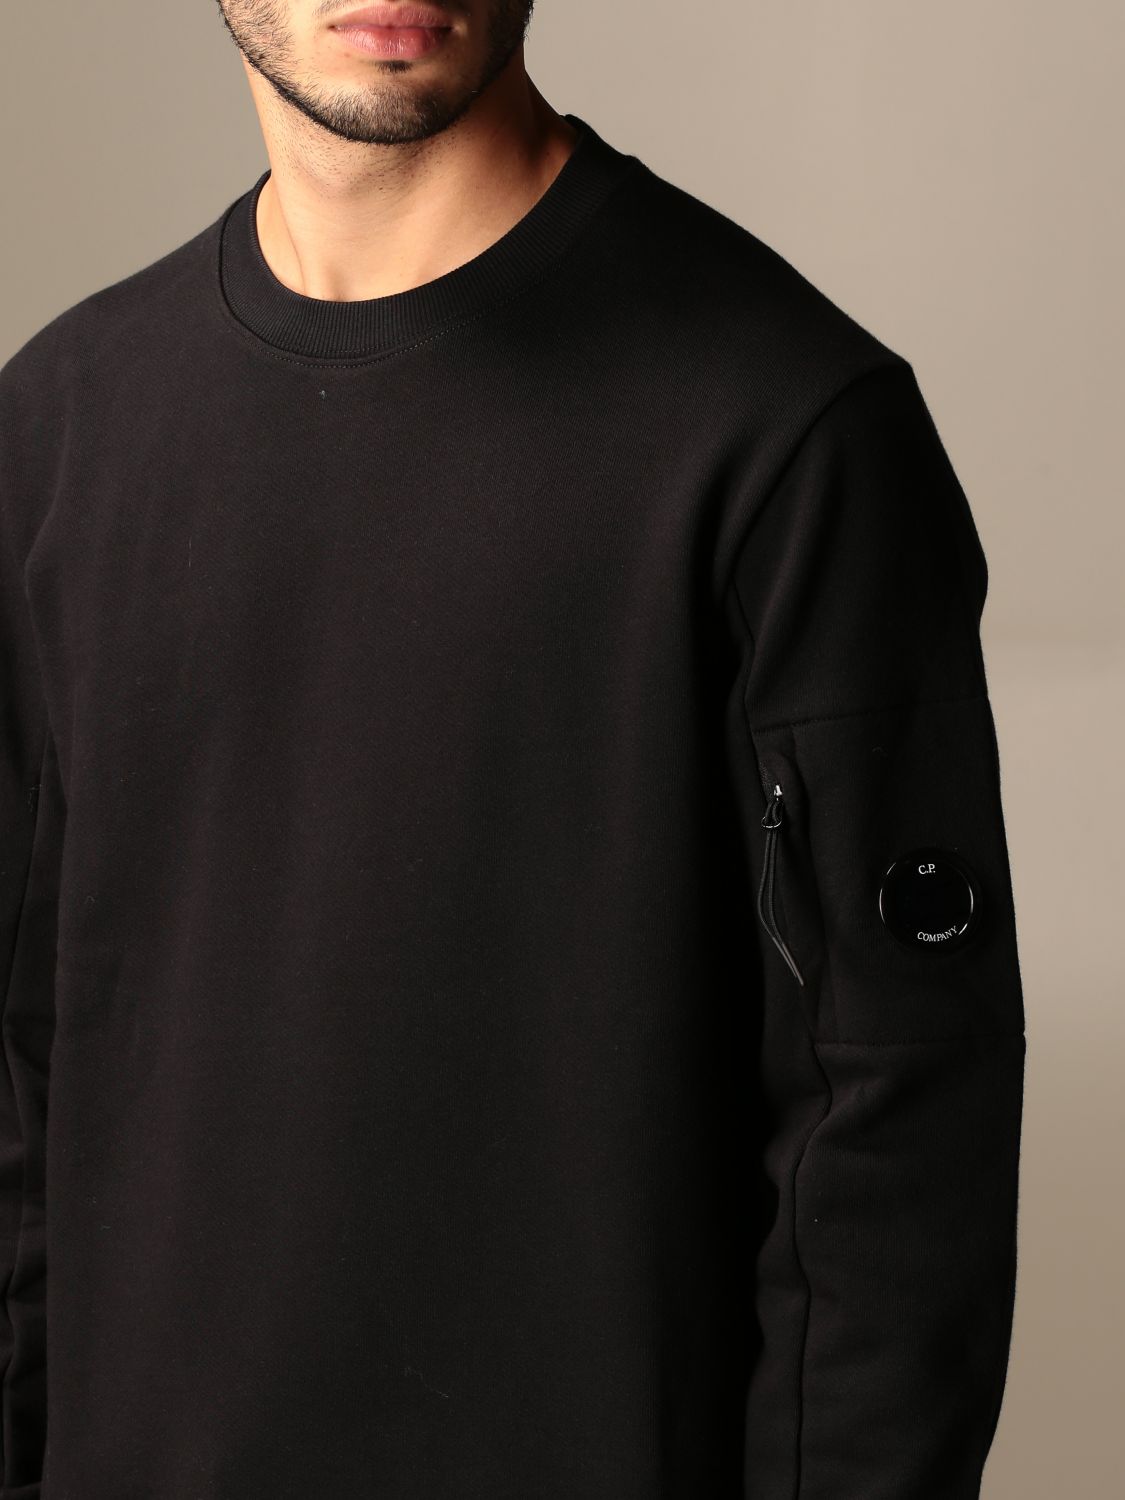 C.P. Company Cotton Sweatshirt in Black for Men